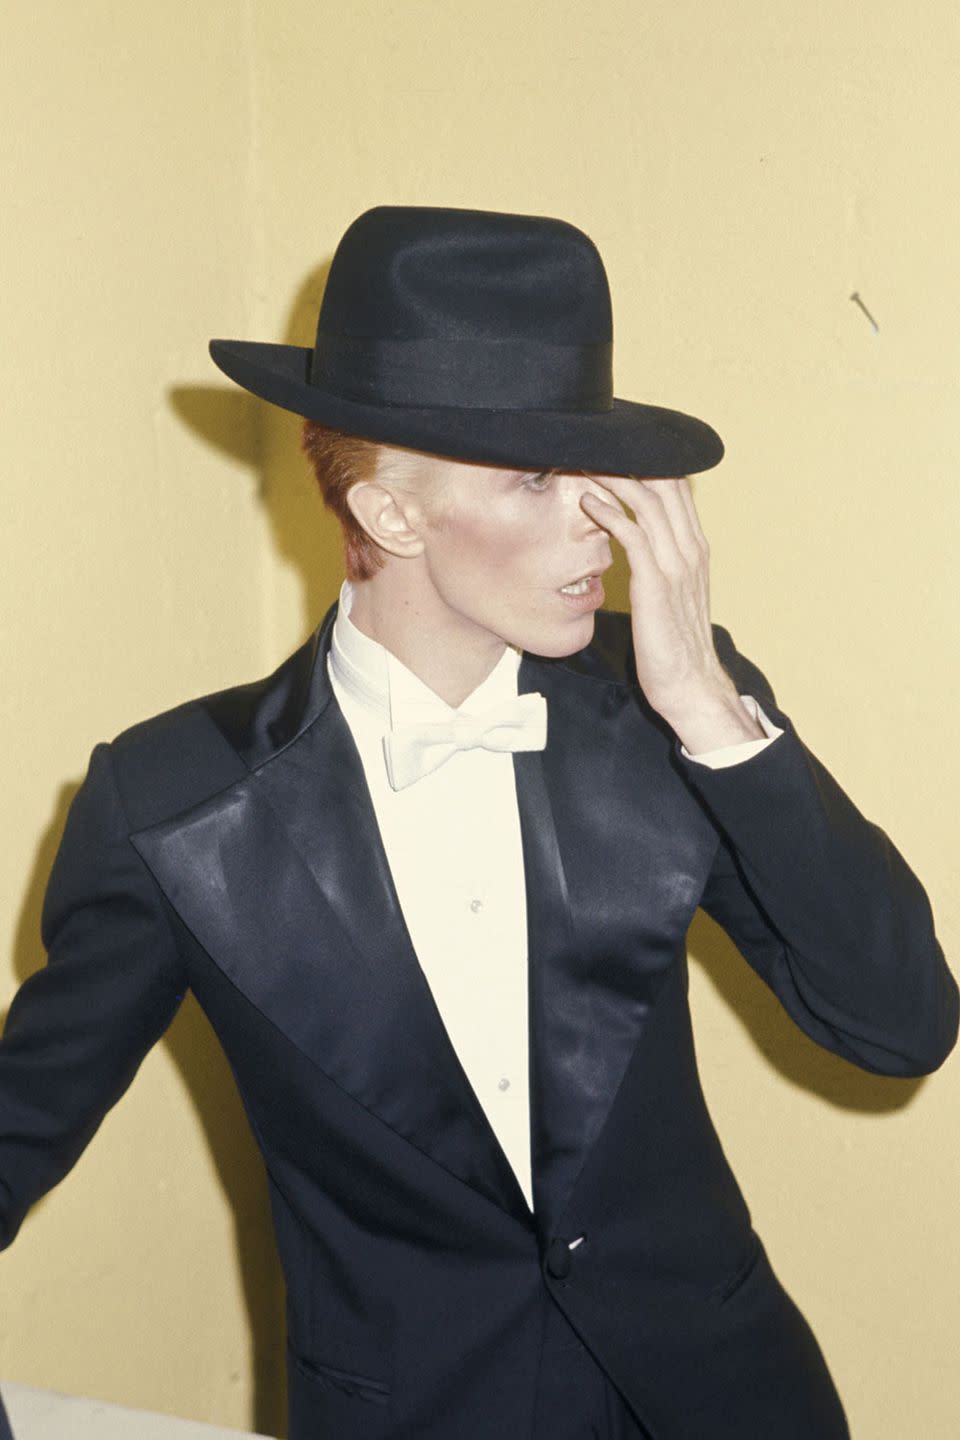 9) David Bowie